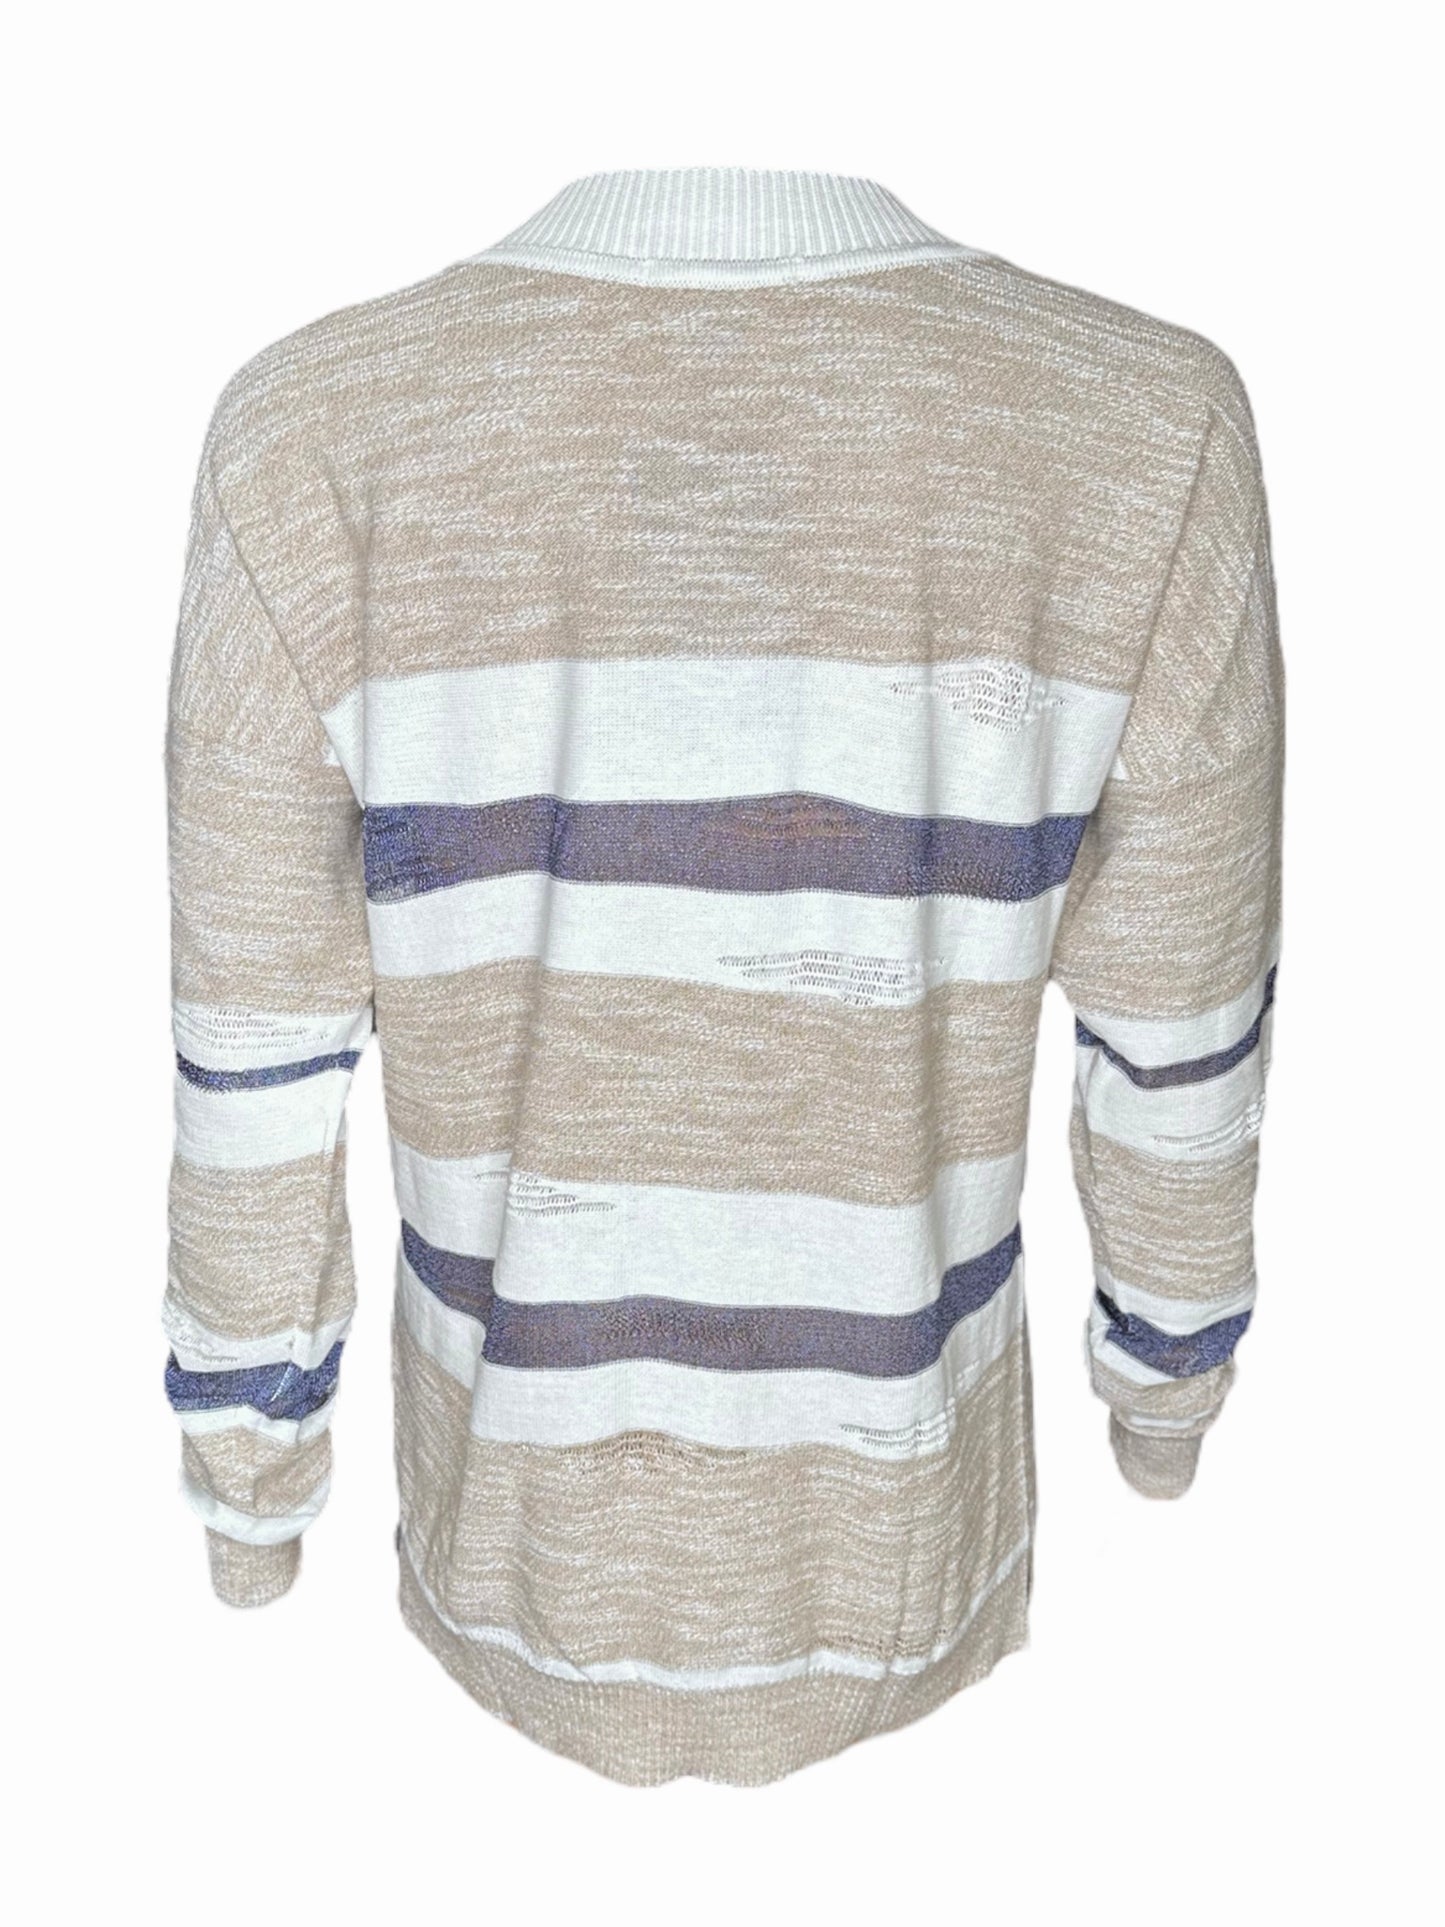 Striped Beaded Long Sleeve Sweater